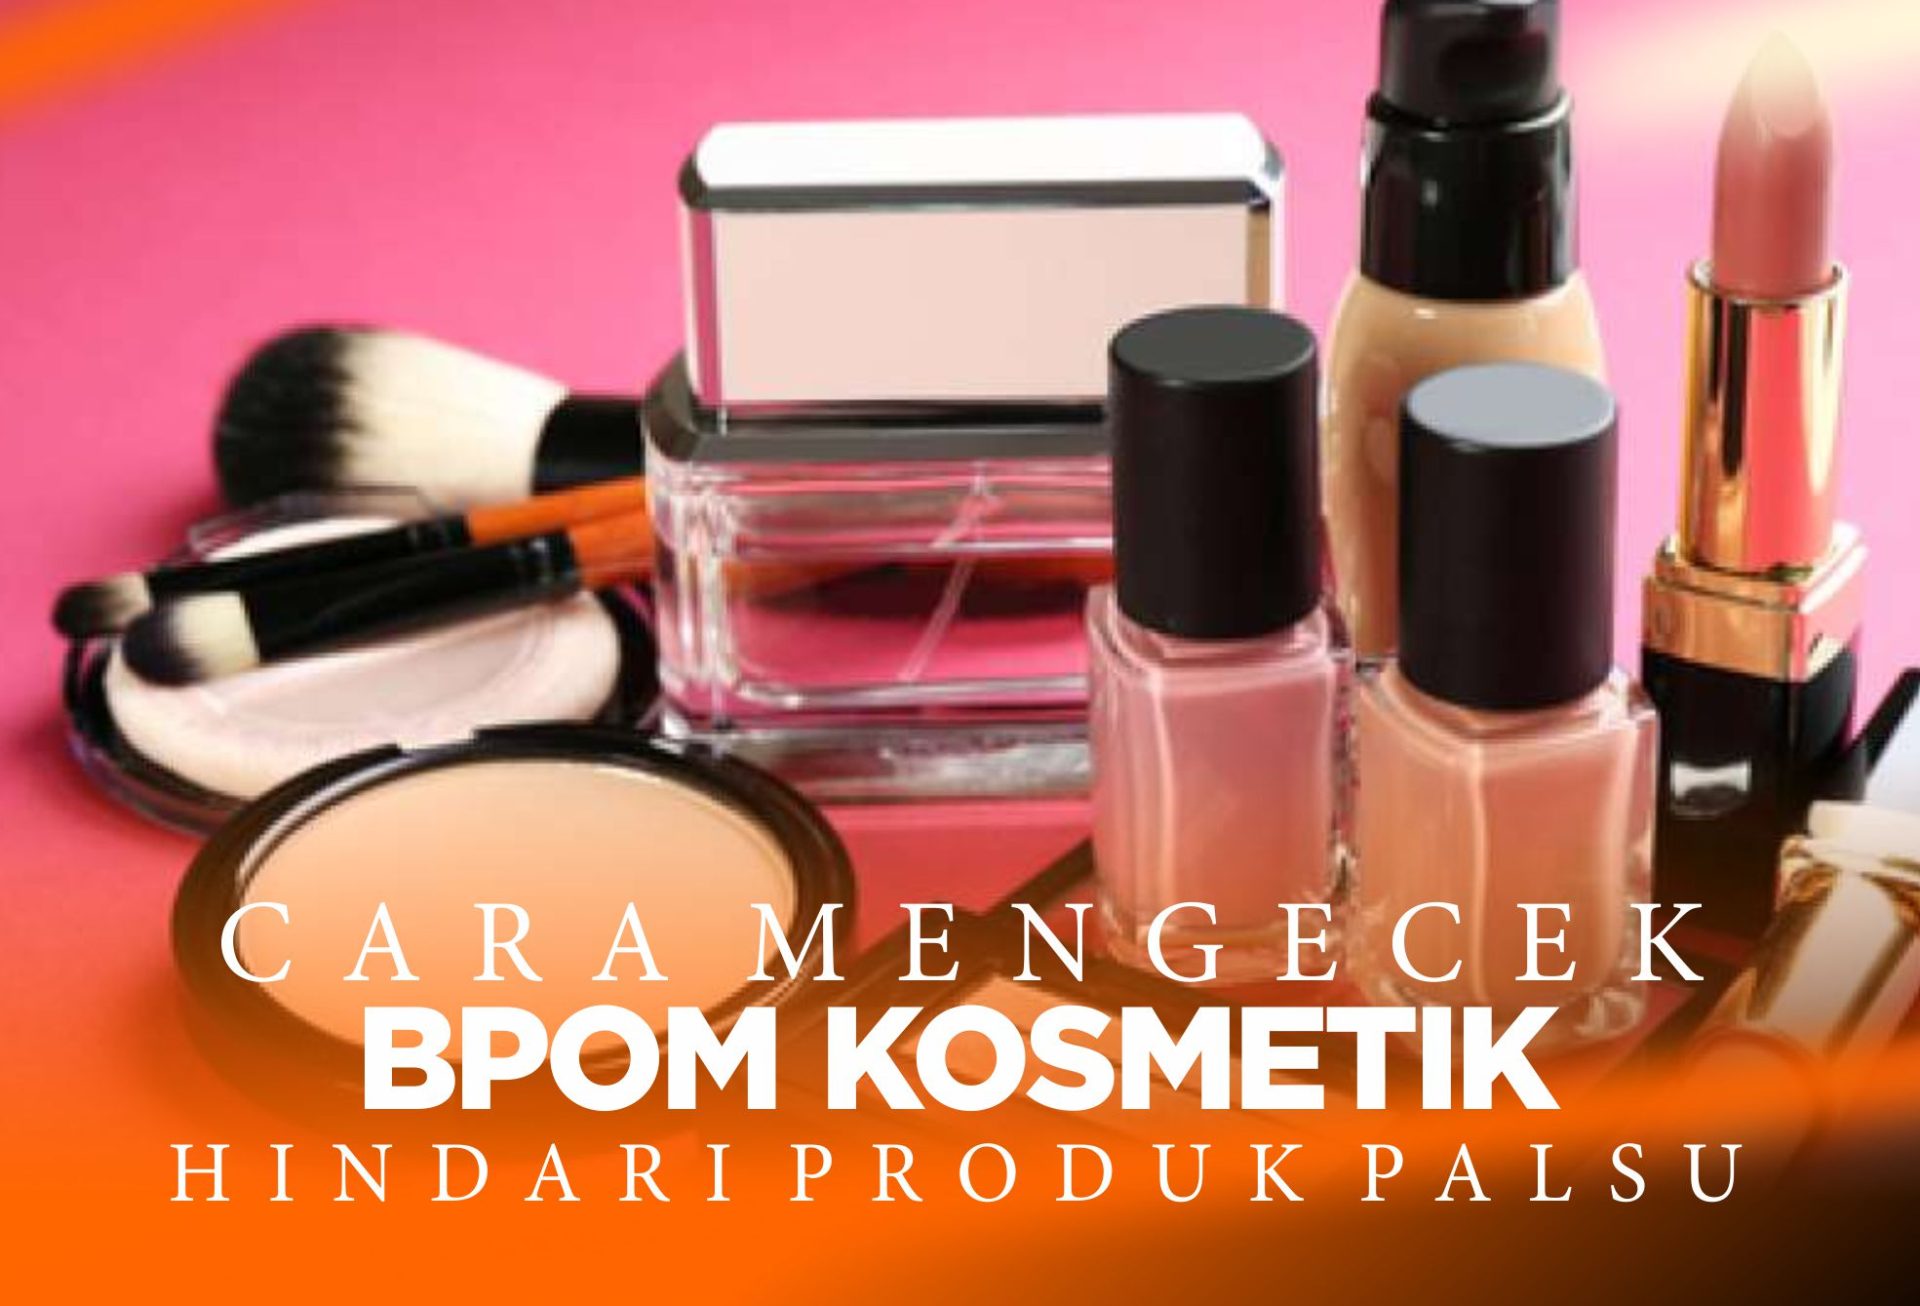 Cara Mengecek BPOM Kosmetik, Via Aplikasi, Barcode & Website!